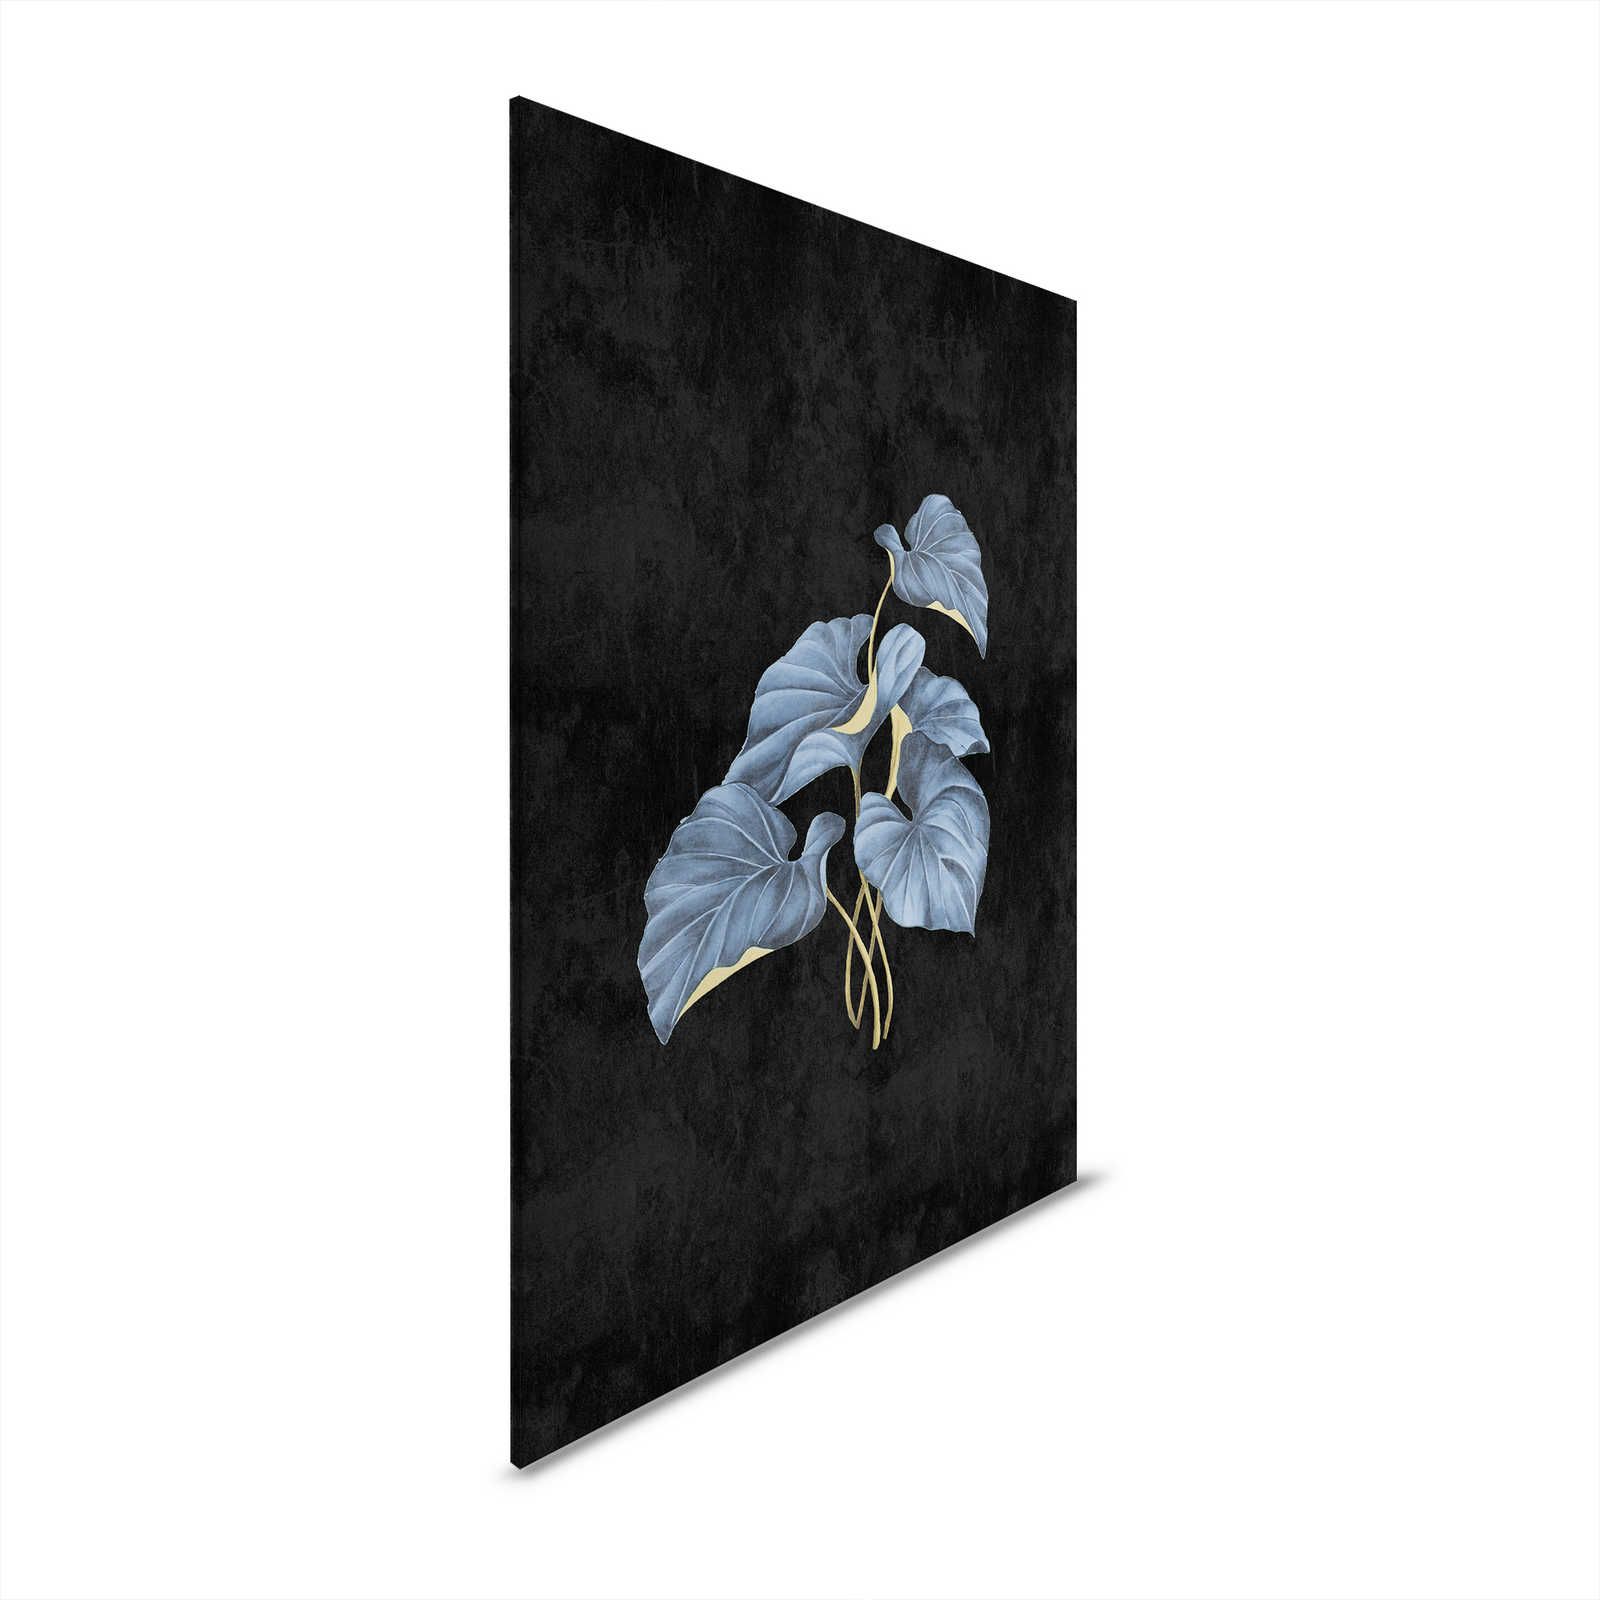 Fiji 1 - Tela nera dipinta con foglie blu e accenti dorati - 0,60 m x 0,90 m
